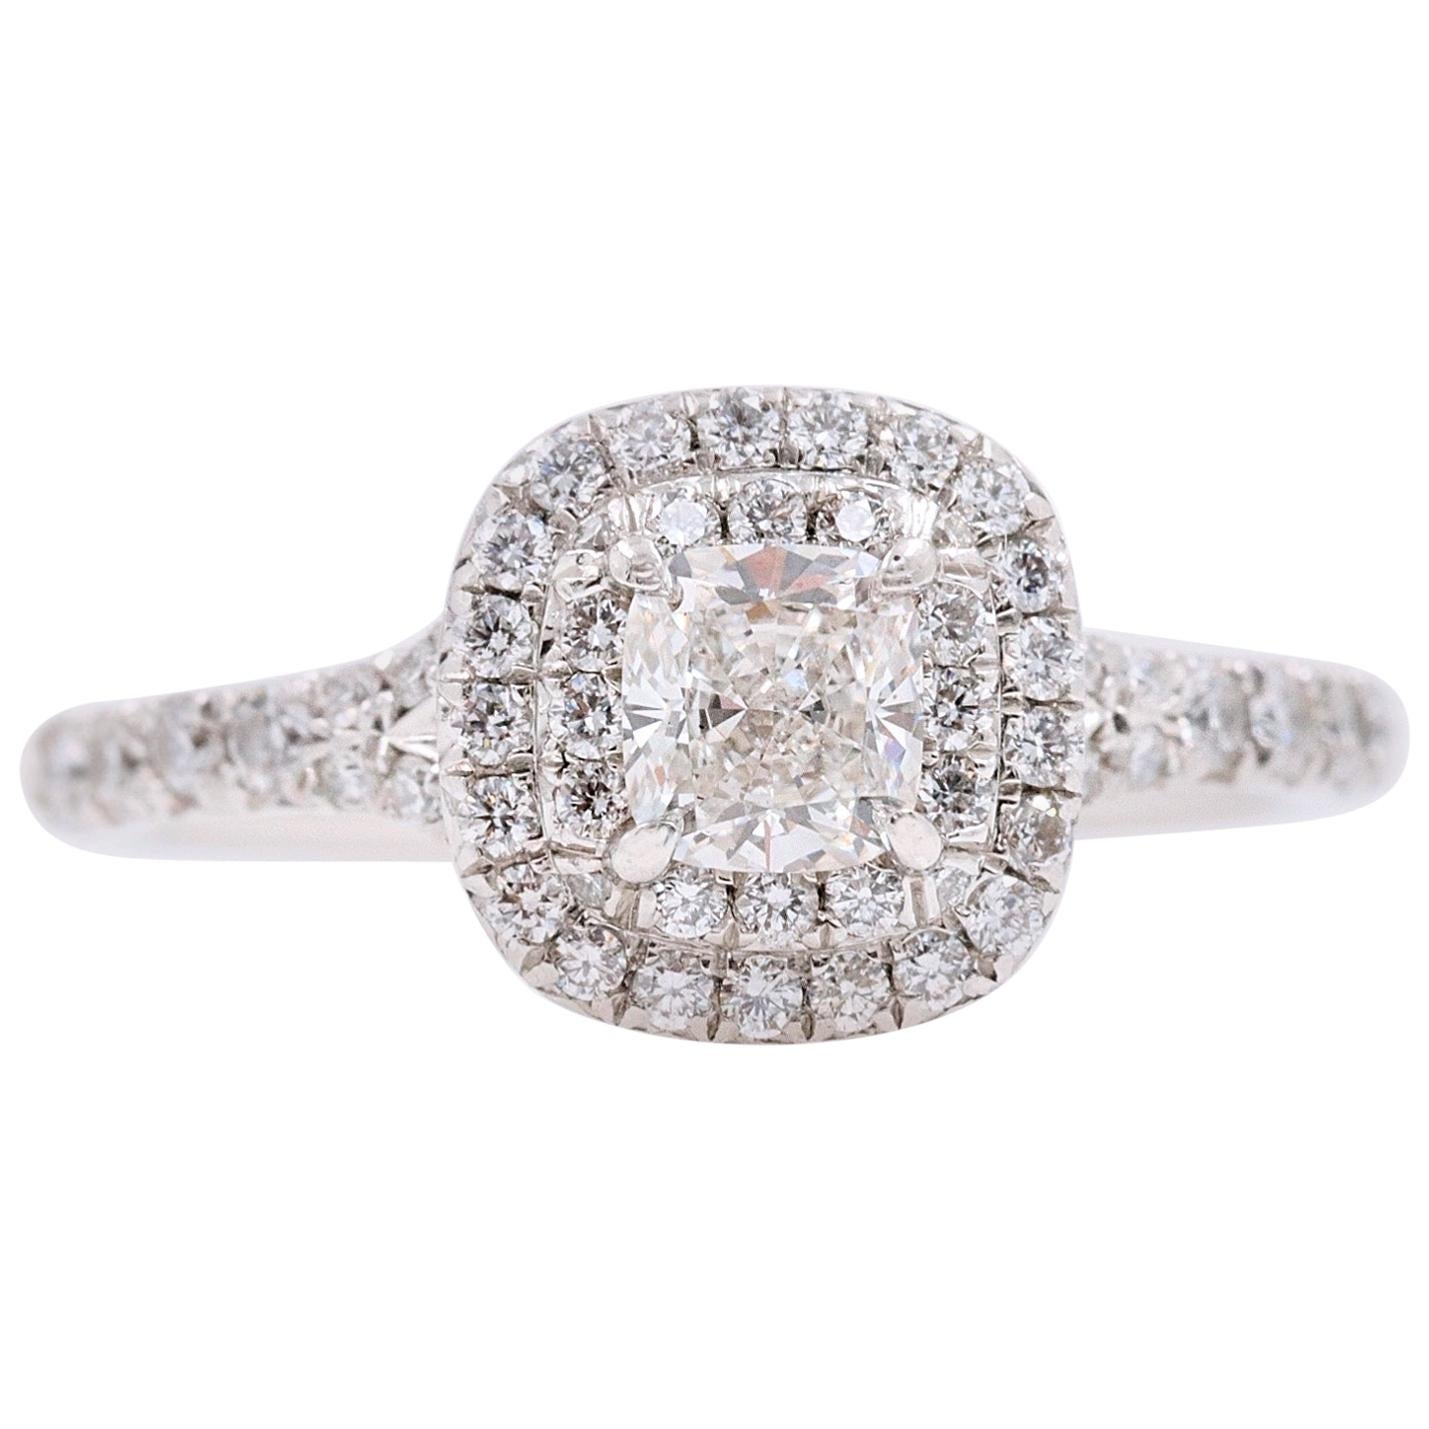 Tiffany & Co. Soleste Round Diamond 0.64 Carat Ring in Platinum Papers